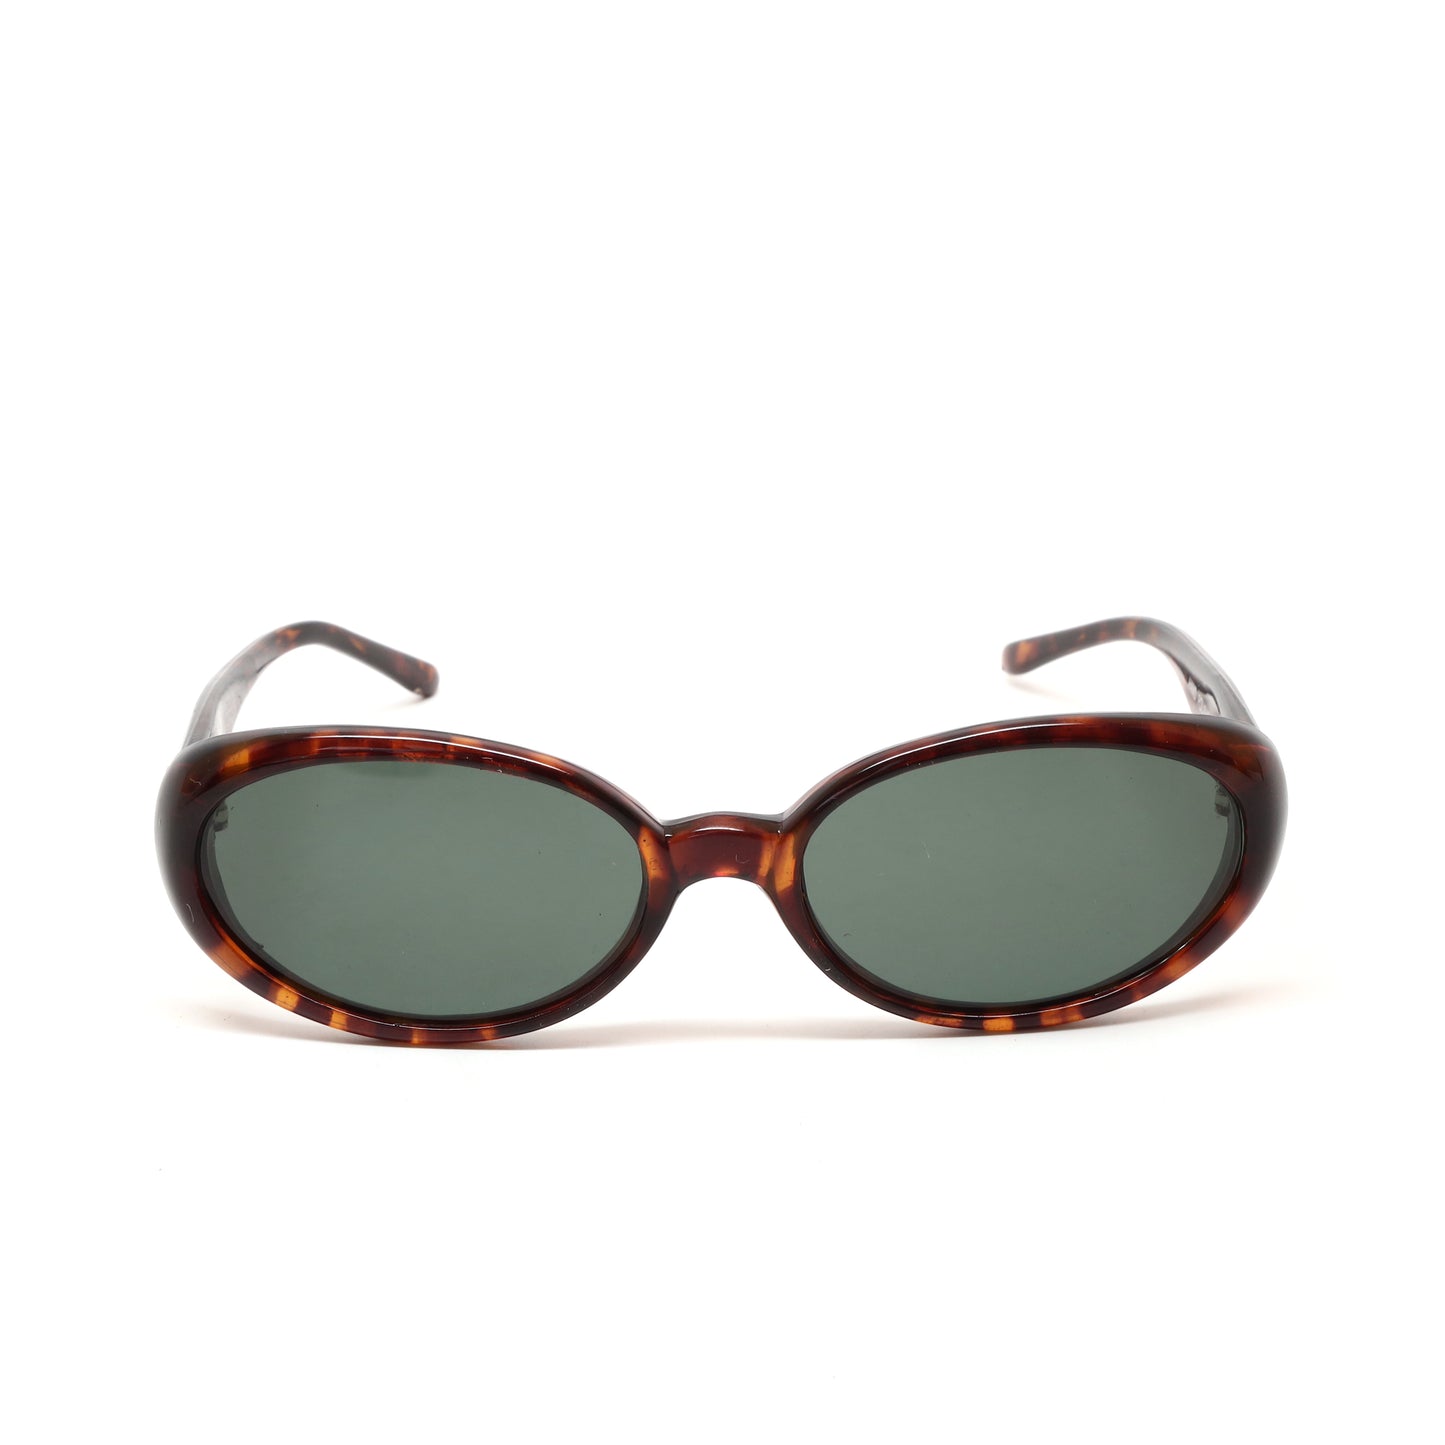 Vintage Standard Size 90s Mod Jane Oval Sunglasses - Tortoise